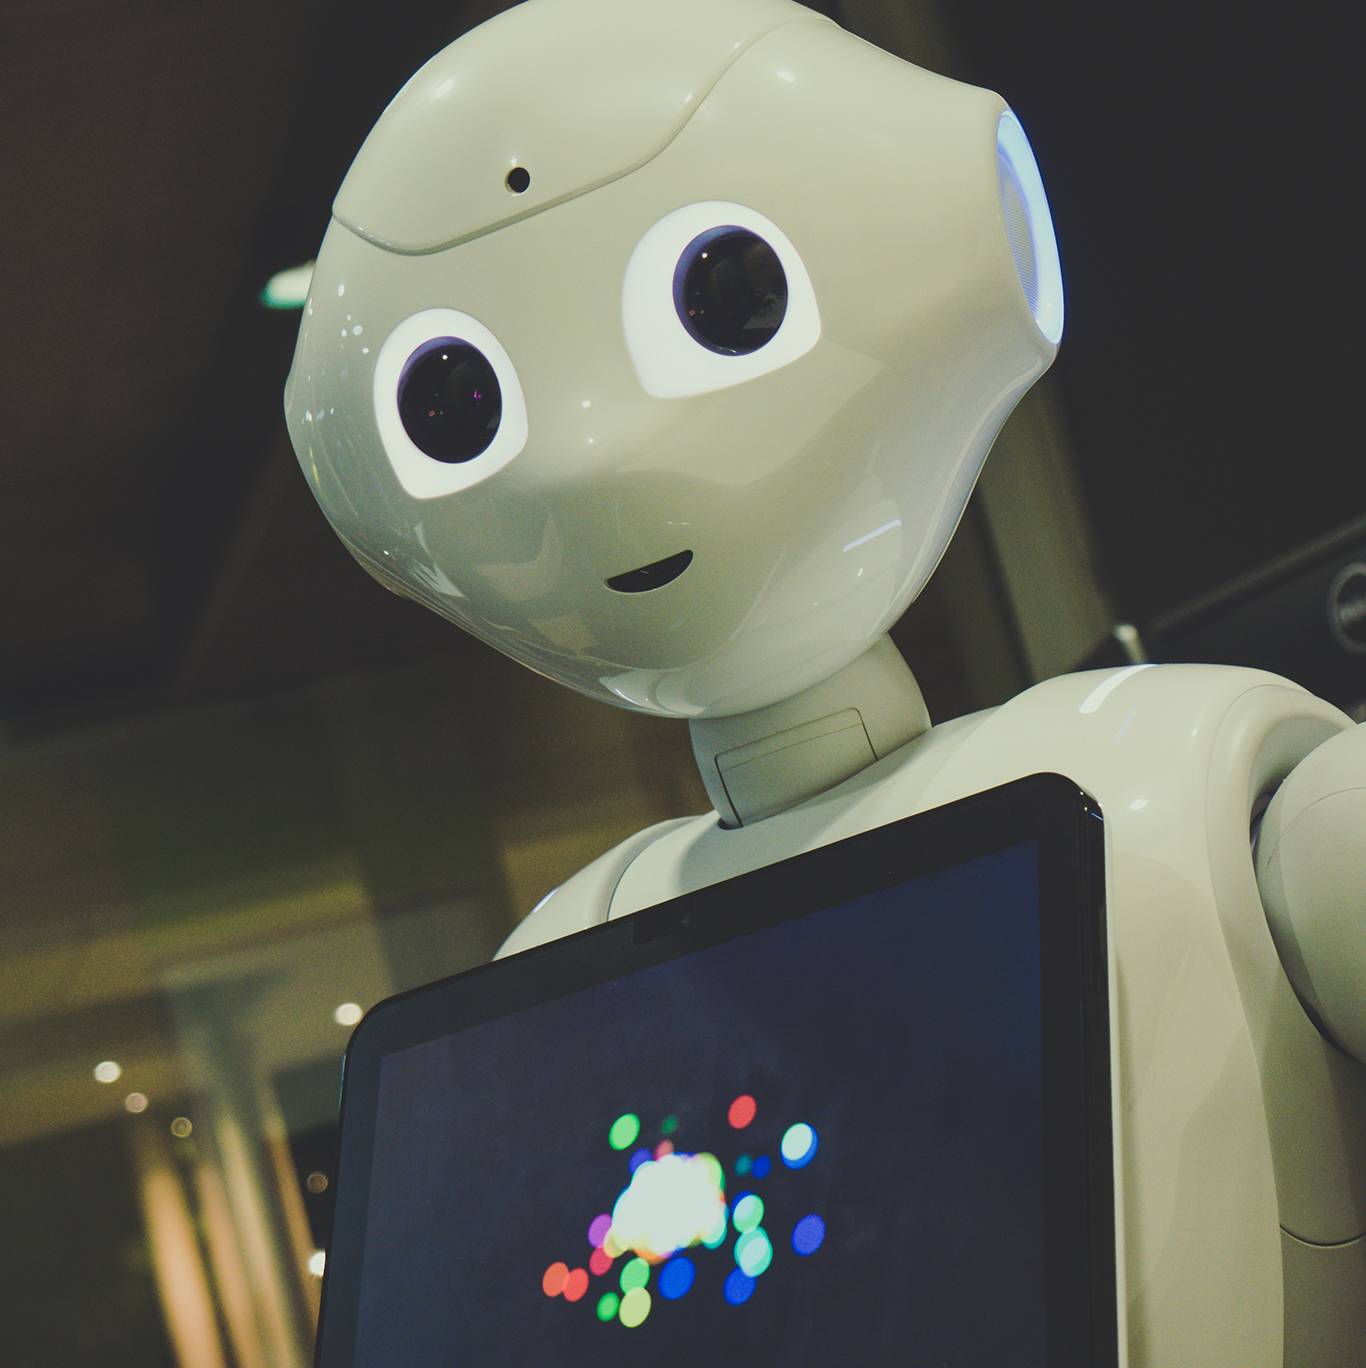 Le robot humanoïde qui divertira vos convives